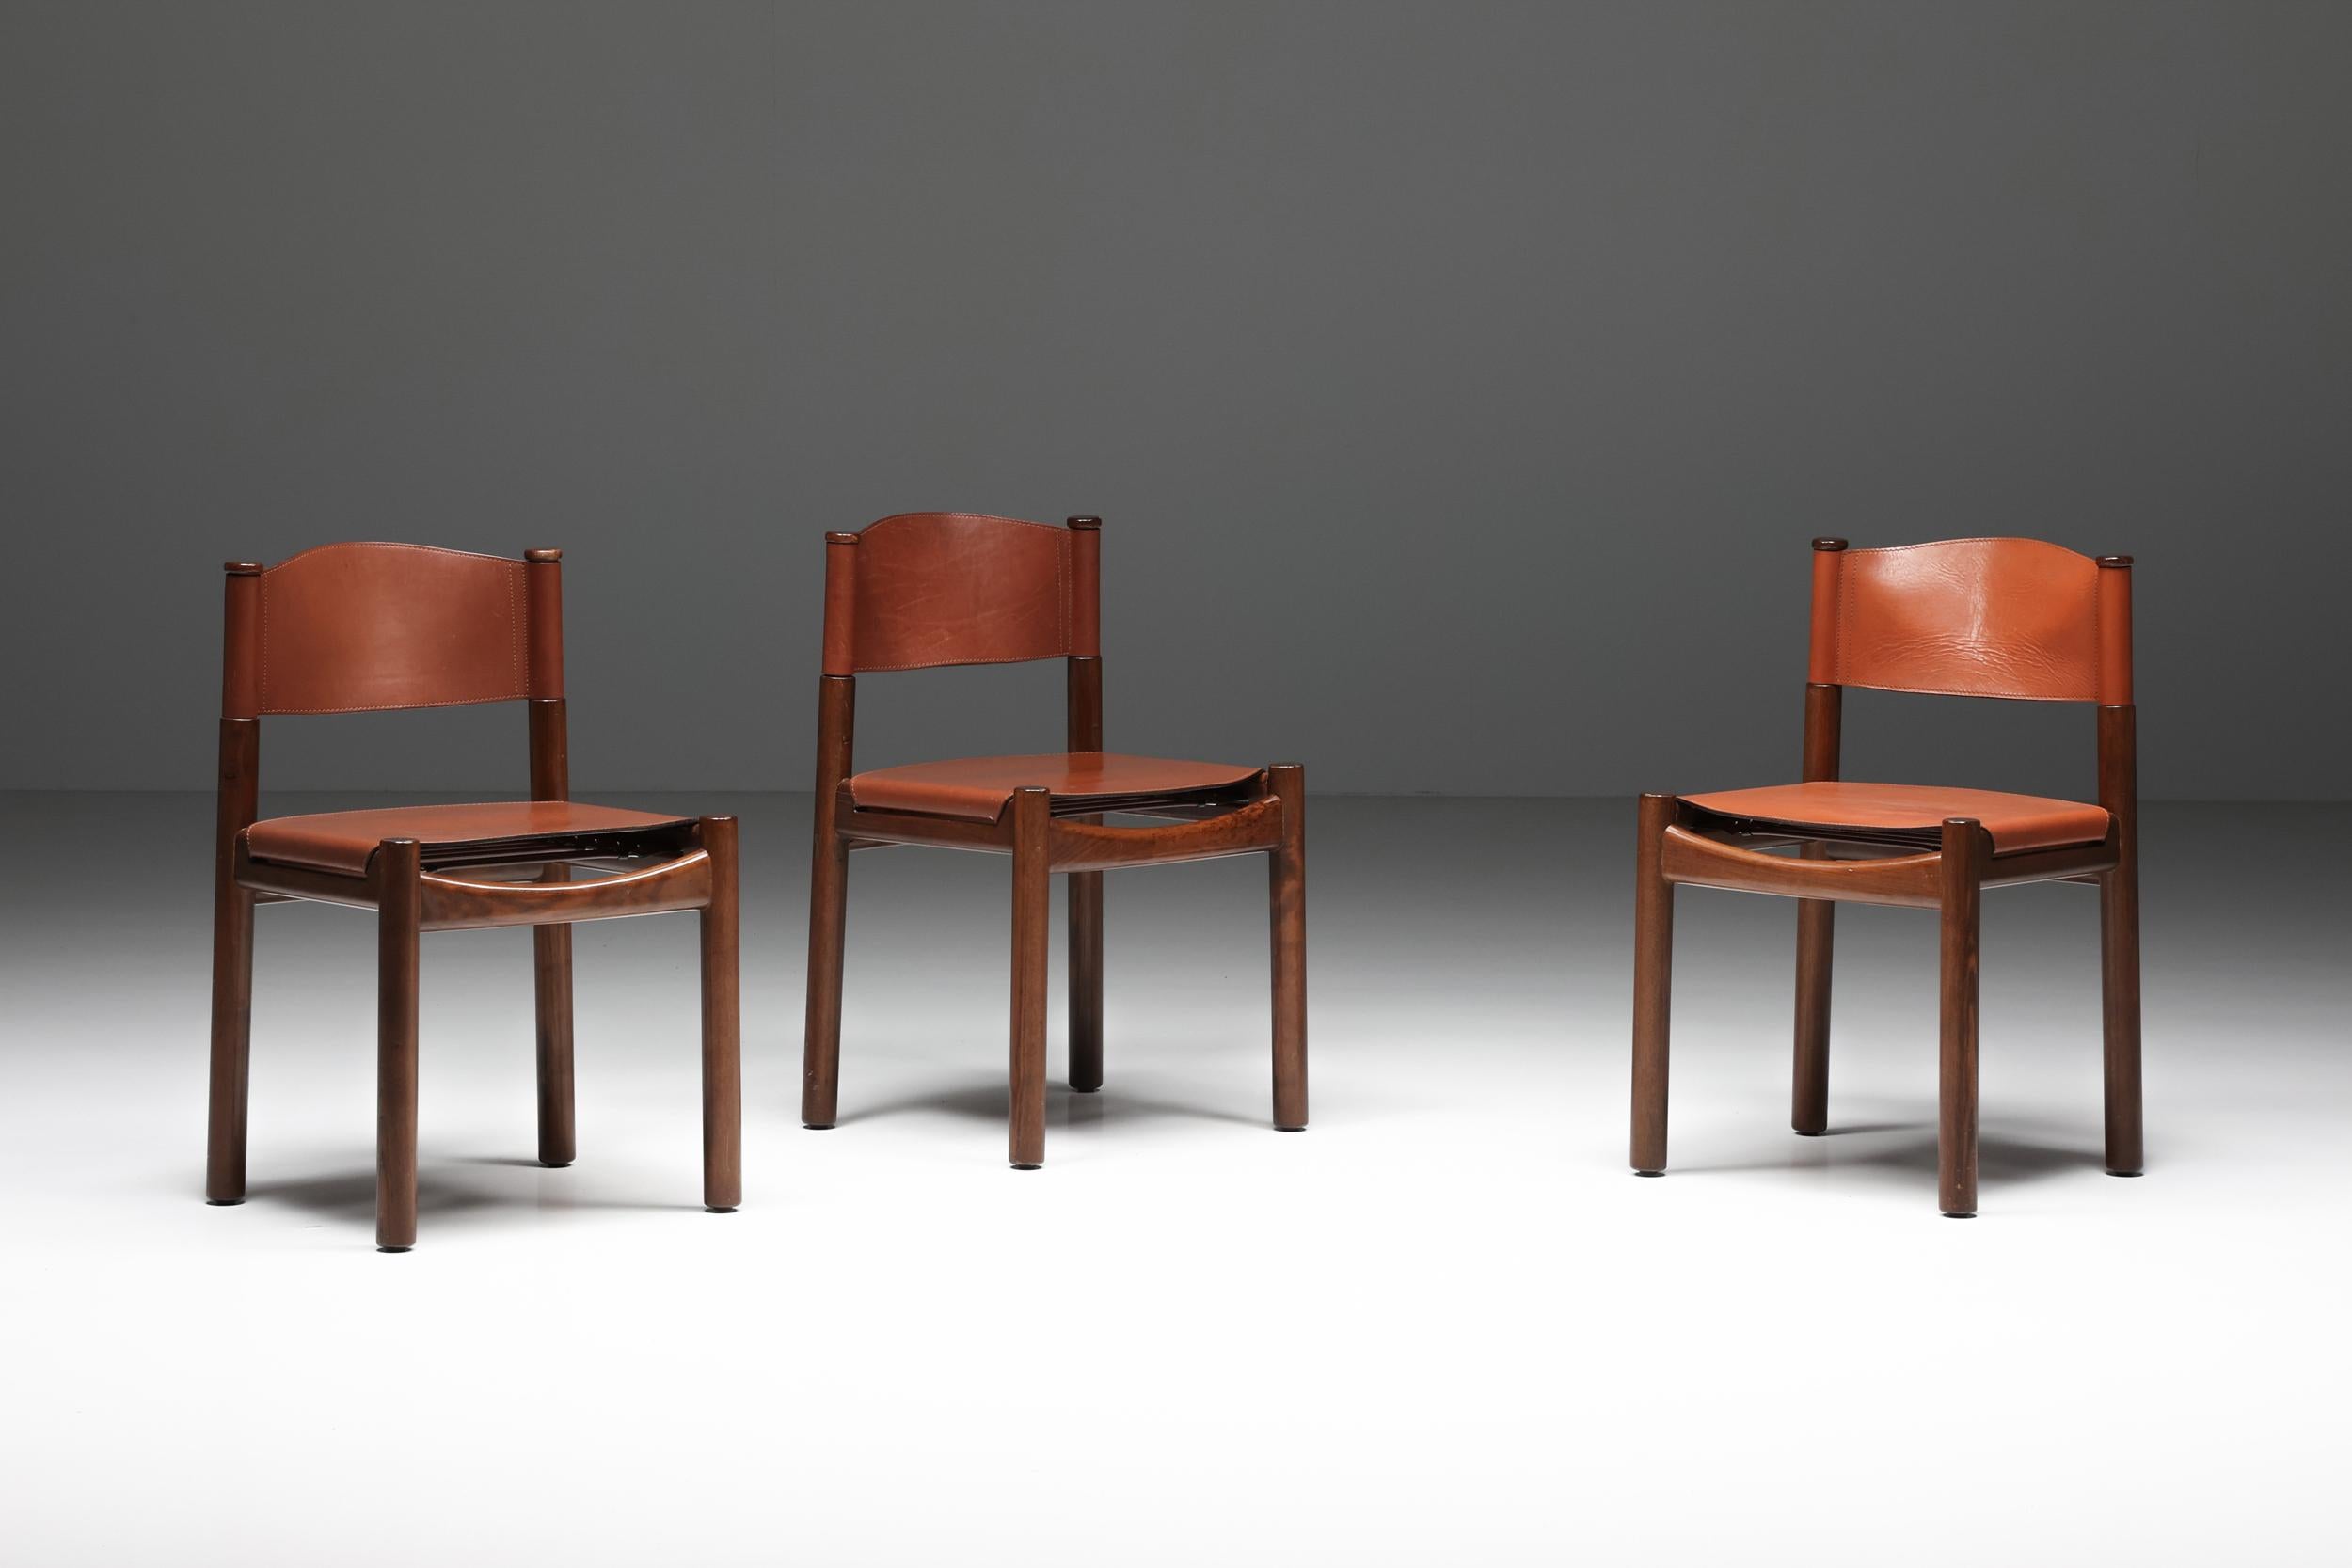 Rustic; Mid-Century Modern; Scarpa; Walnut; Leather; Dining chairs; 1950's; Italian design; Italian craftmanship; Organic details; Modern interior; 

Scarpa-inspired walnut & leather dining chairs made in Italy in the 1950s. Remarkable organic